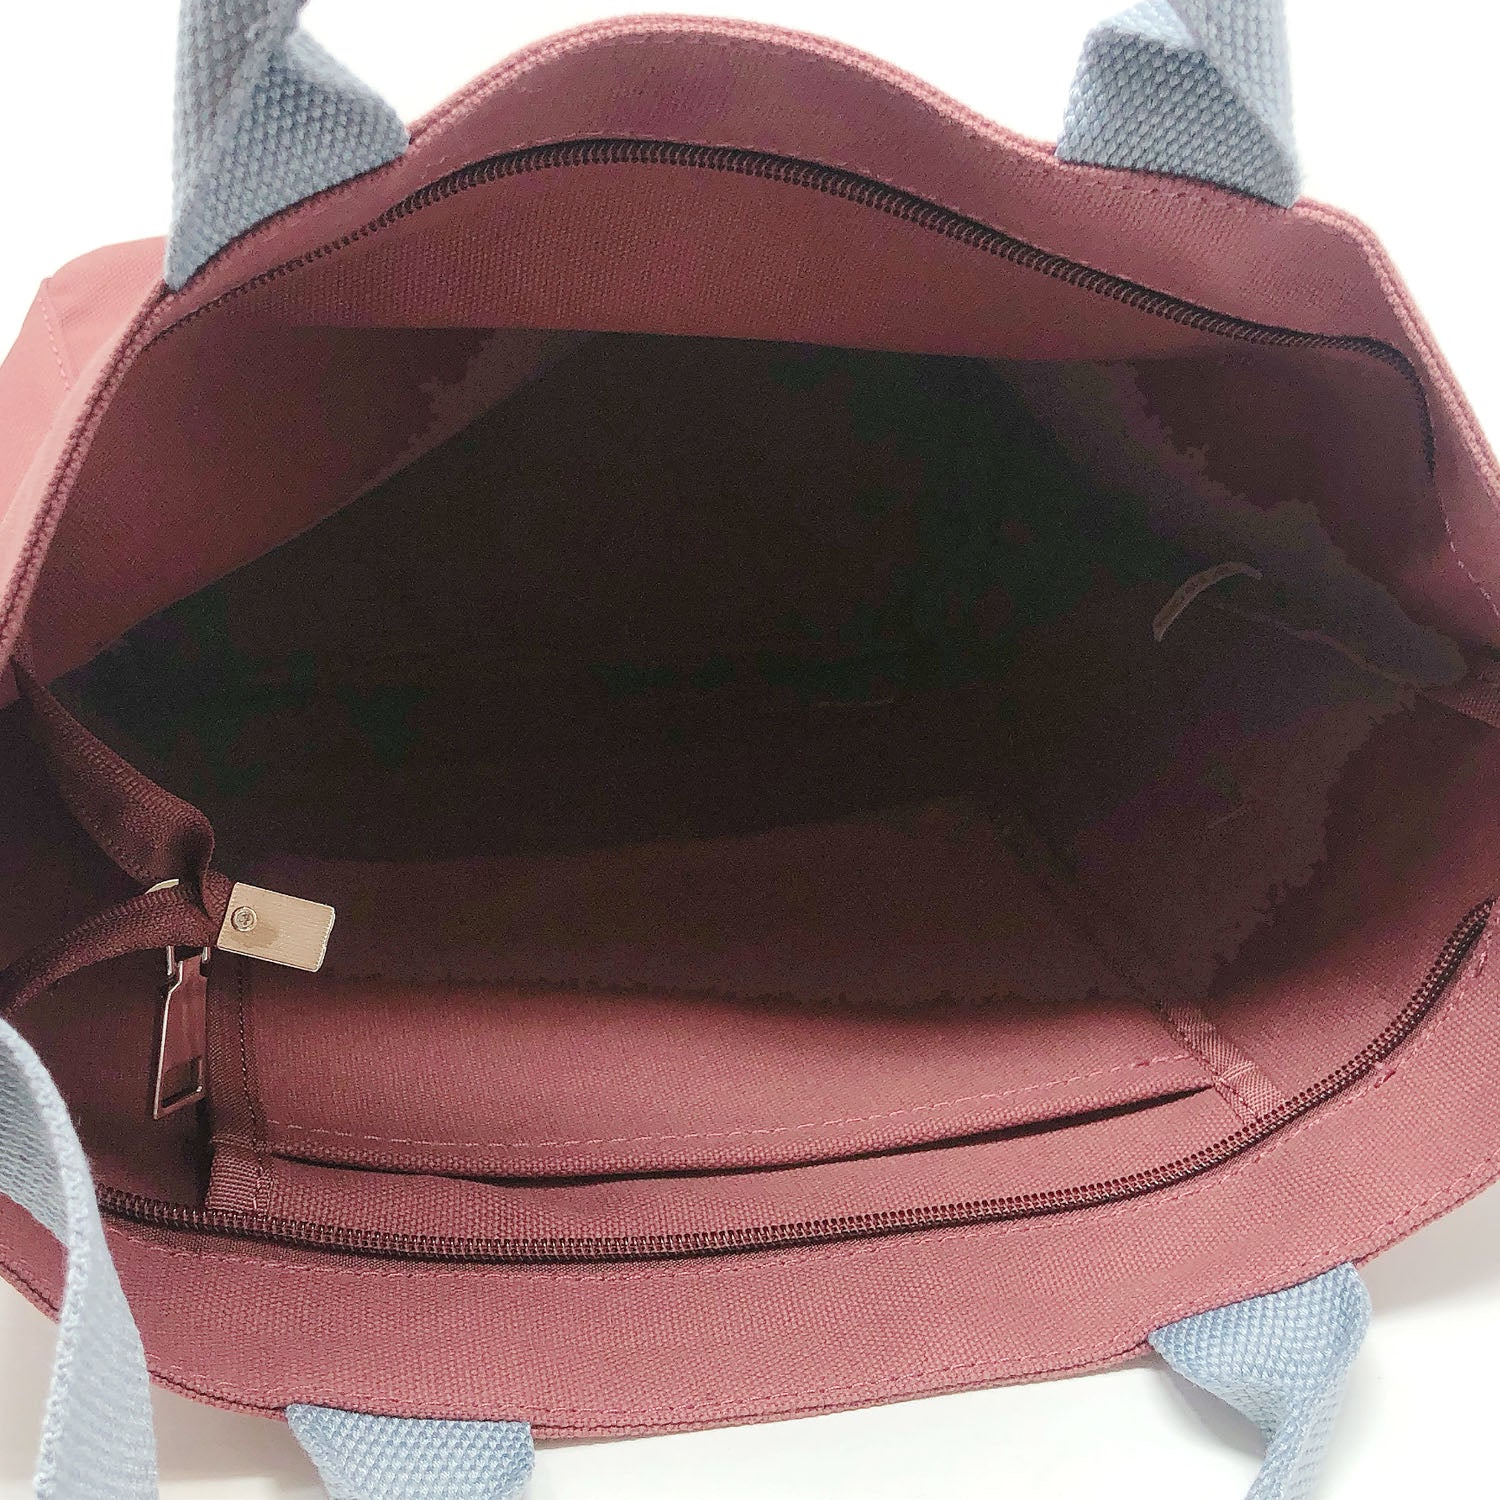 Wrapables Canvas Tote Bag for Women, Casual Cross Body Shoulder Handbag